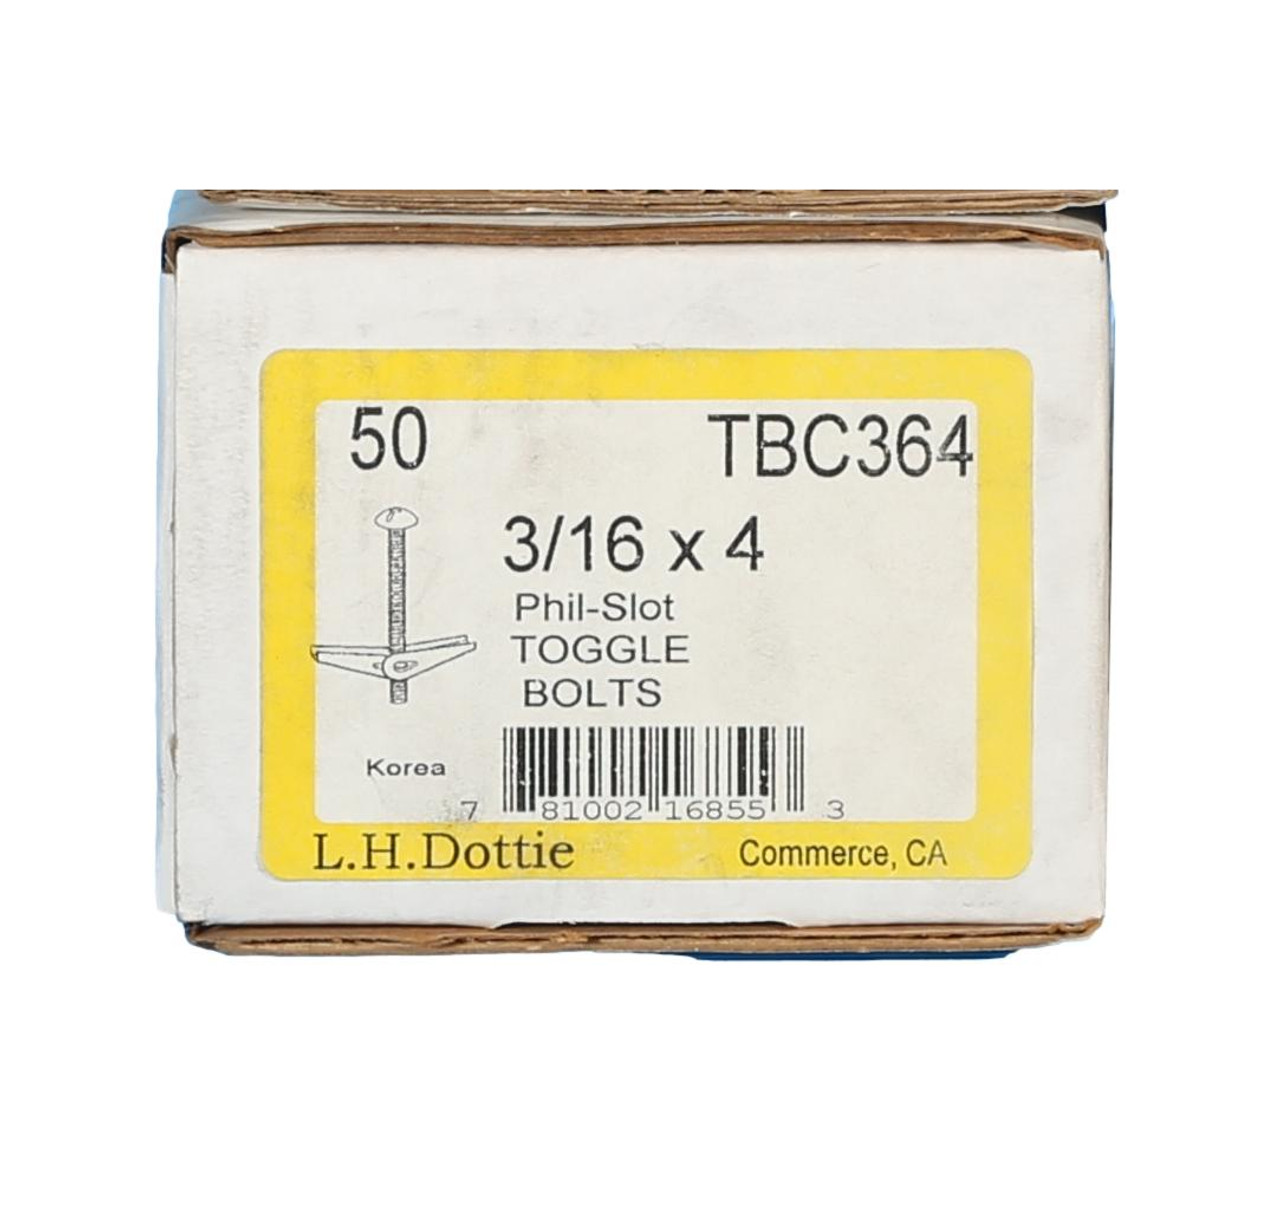 TBC364
Box of 50